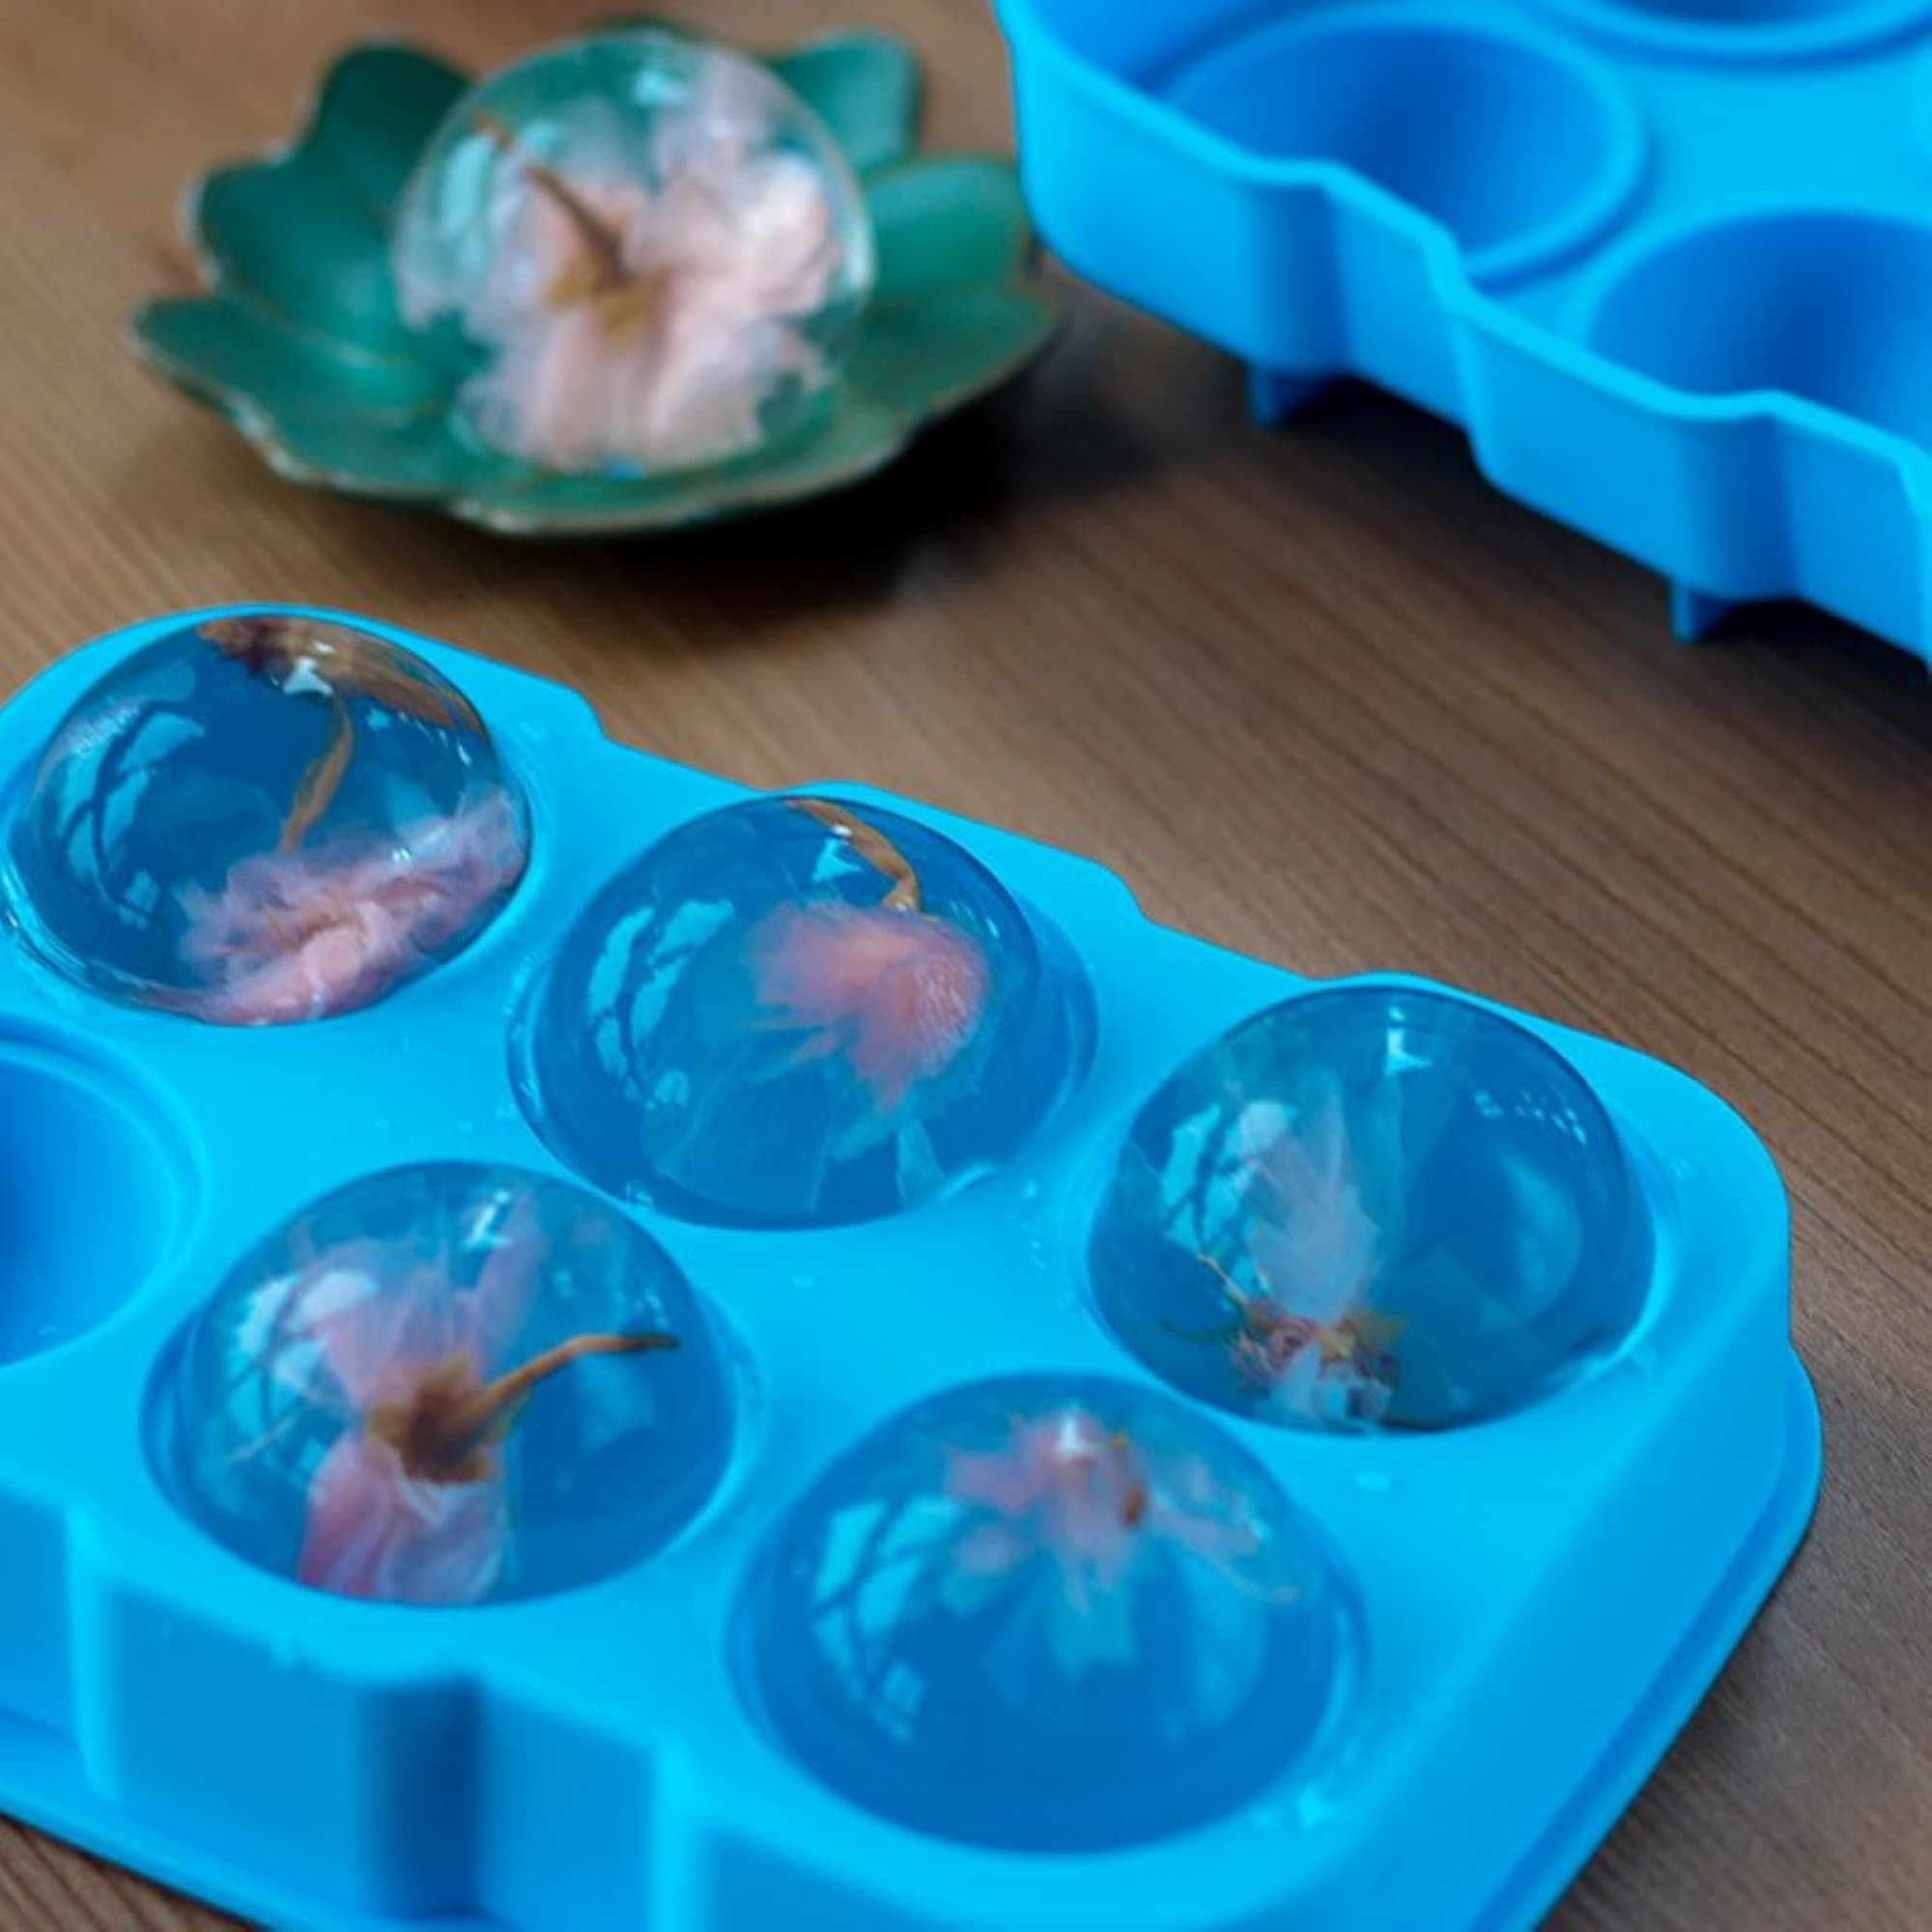 Toadfish Ice Ball Tray, 6 Cubes